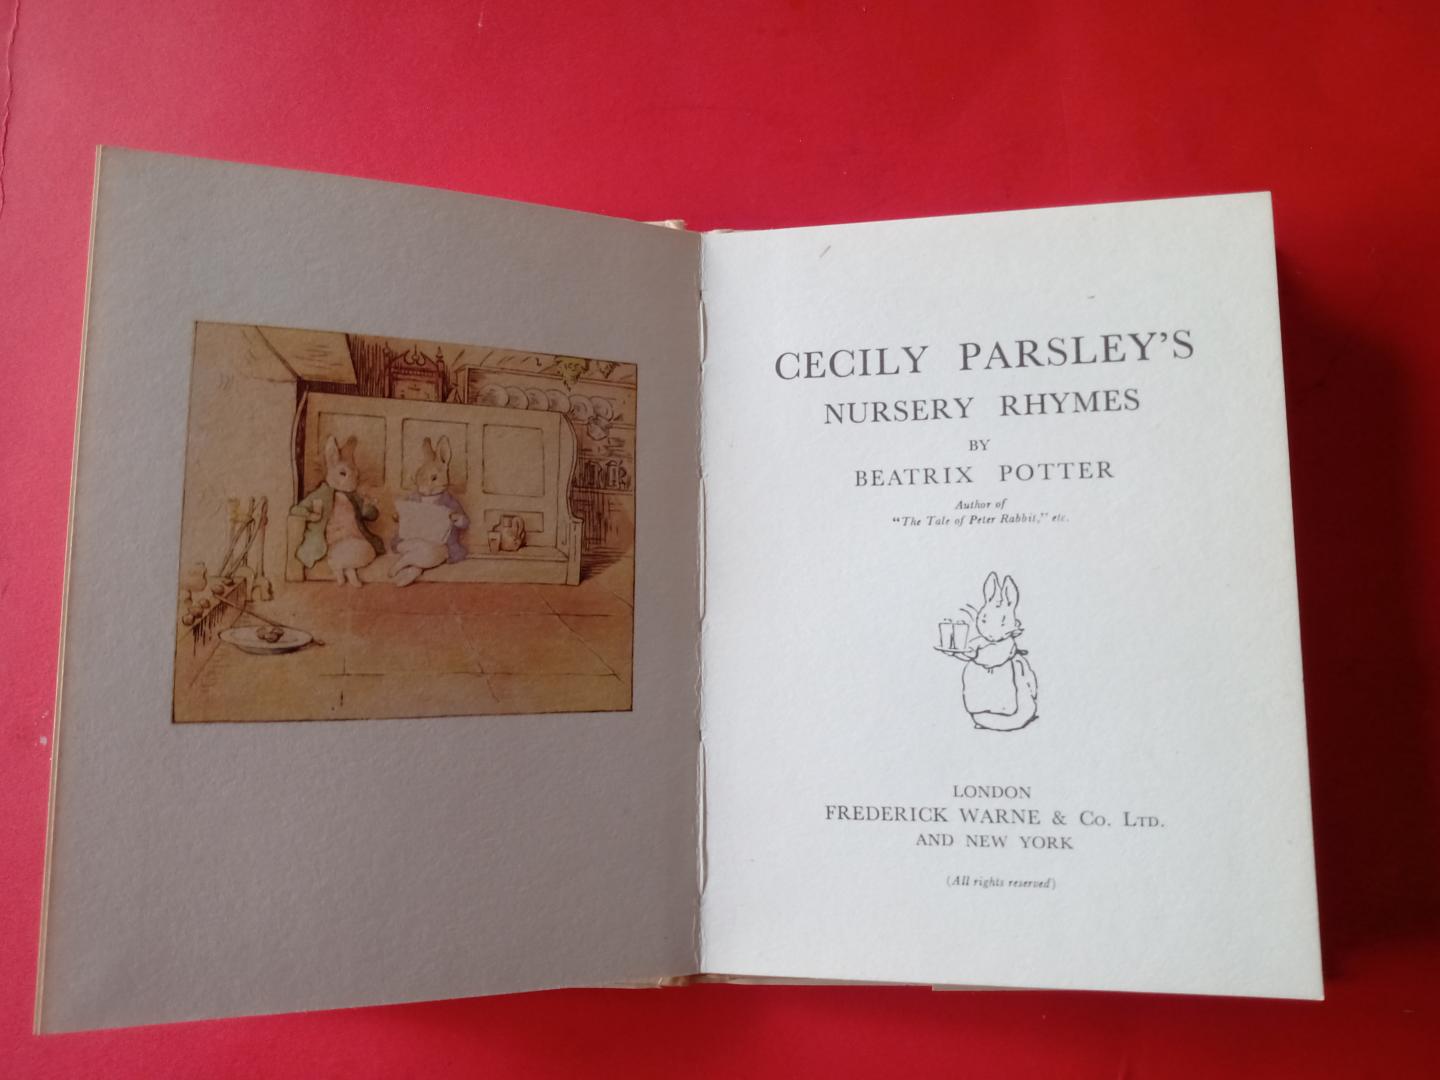 Beatrix Potter, ( nr 24 ) - Cecily Parsley's nursery rhymes.